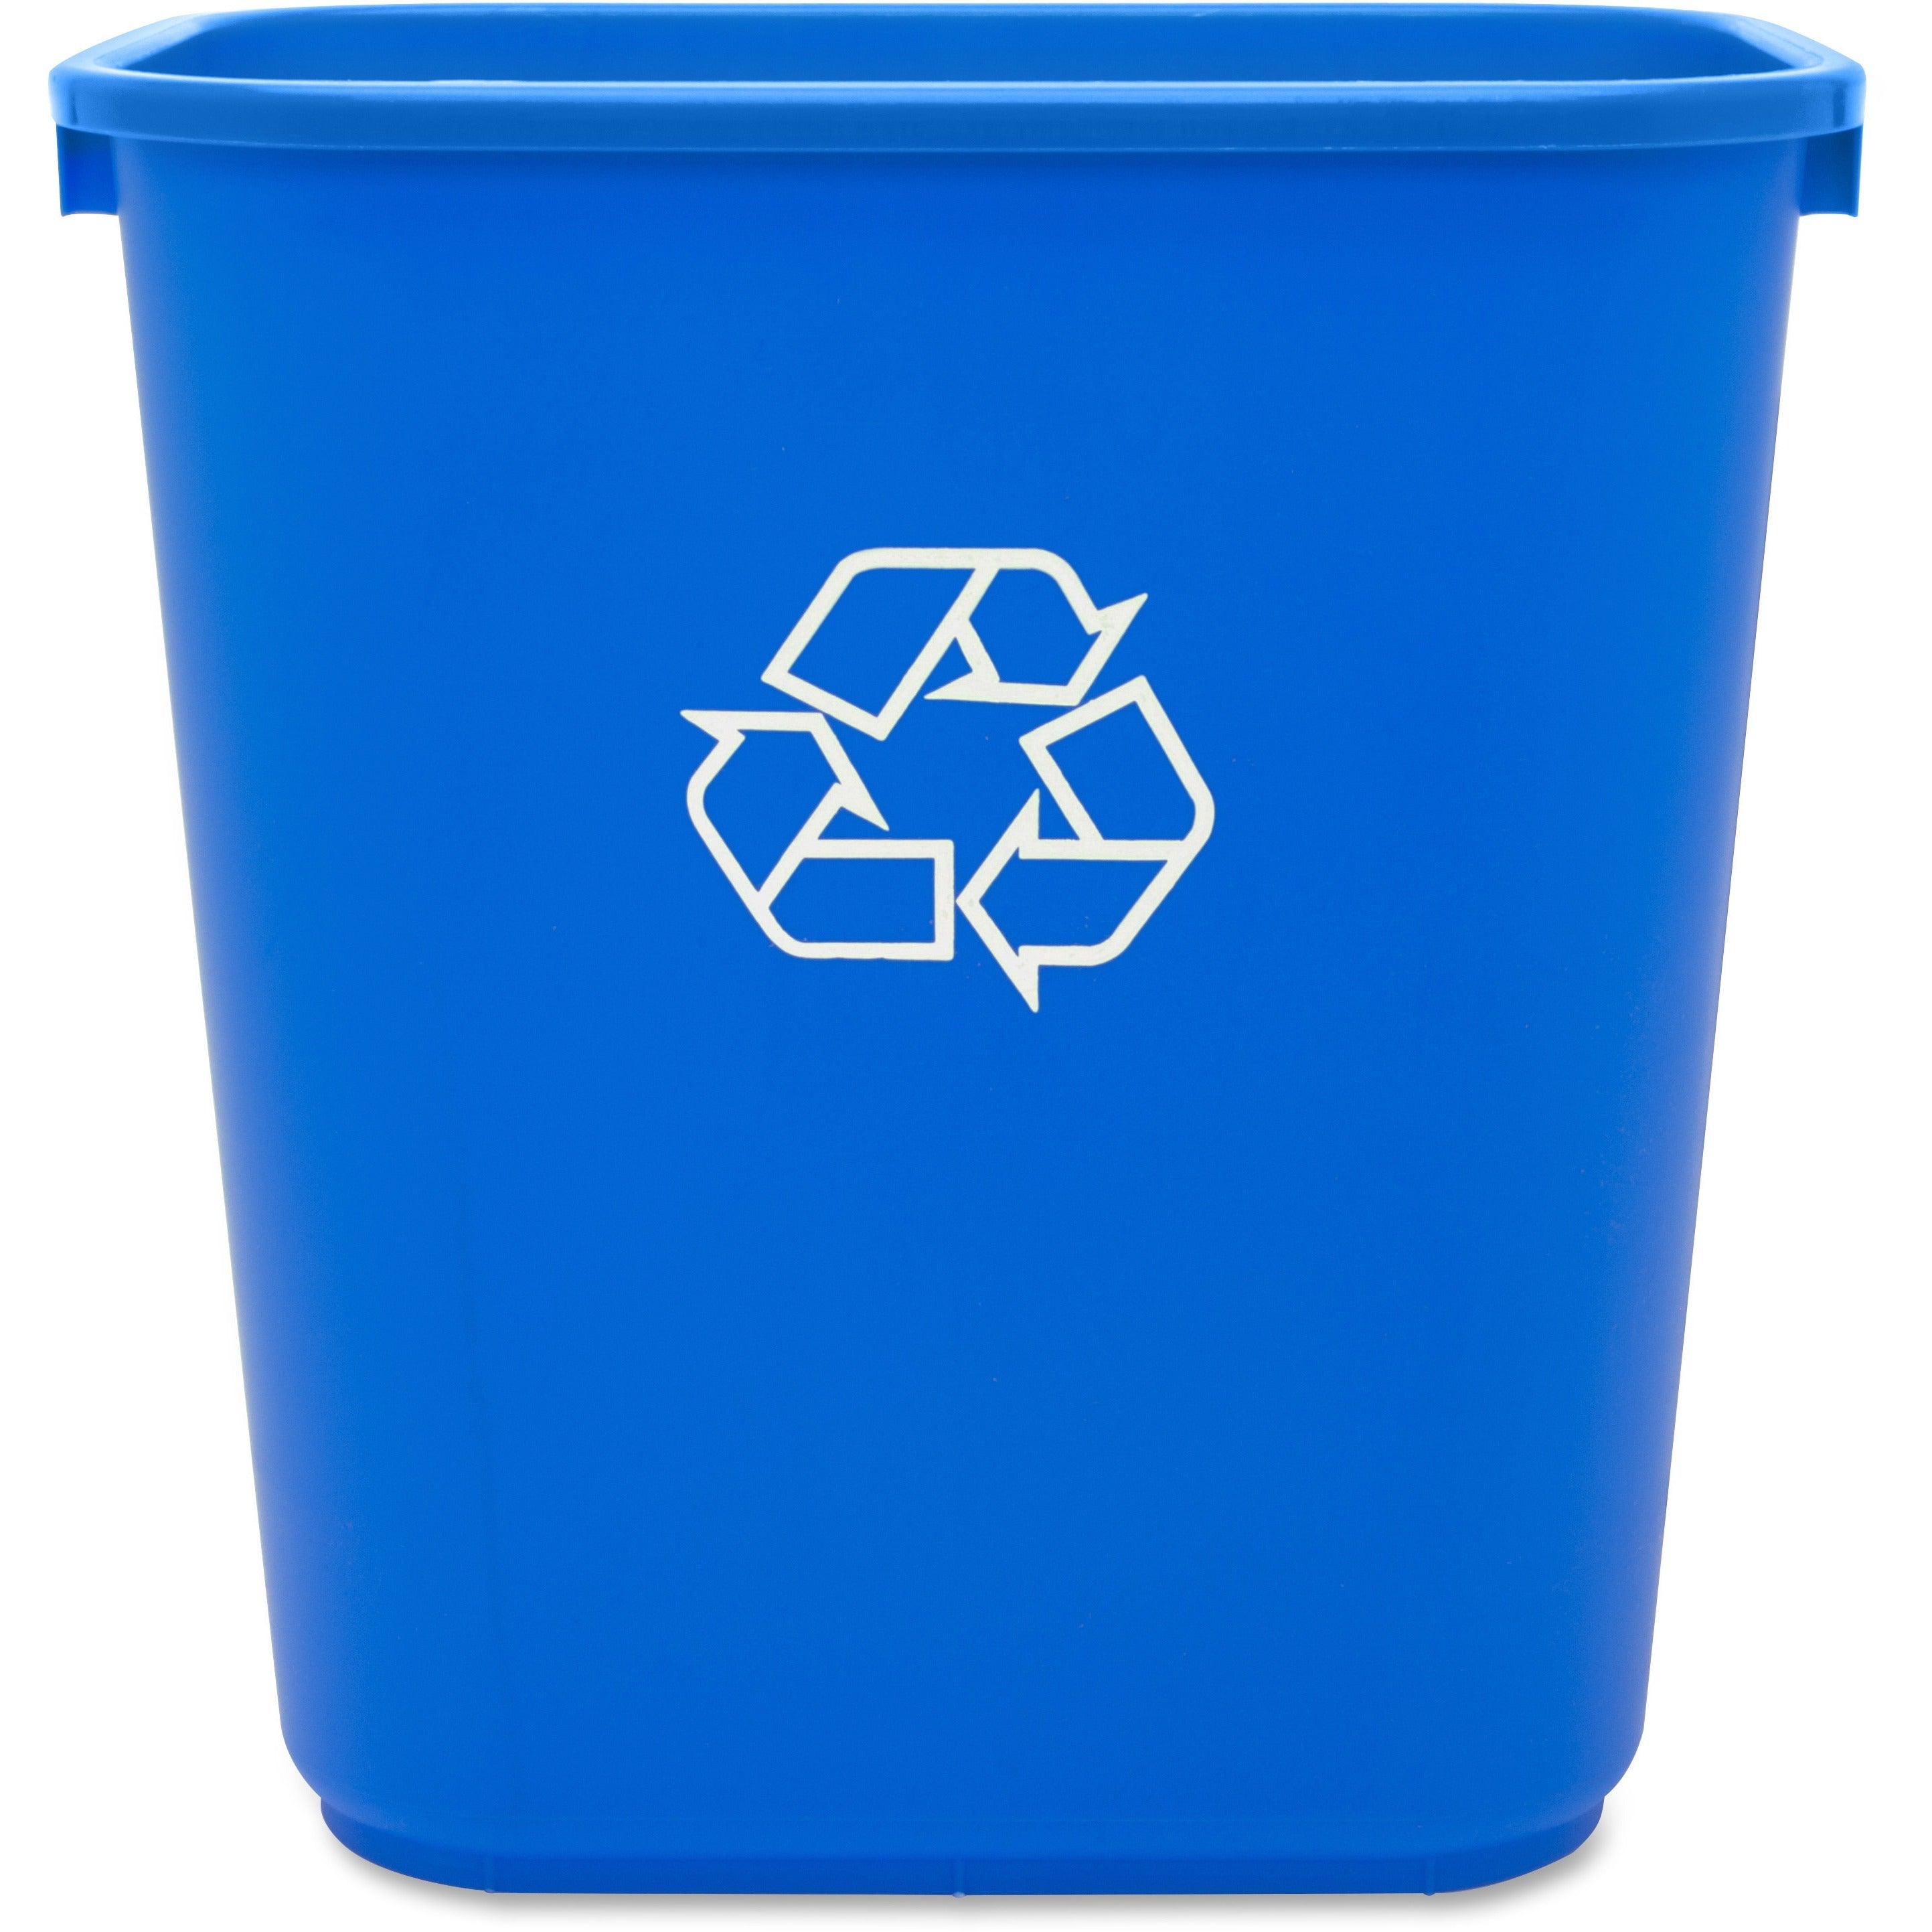 Genuine Joe 28-1/2 Quart Recycle Wastebasket - 7.13 gal Capacity - Rectangular - 15" Height x 14.5" Width x 10.5" Depth - Blue, White - 1 Each - 